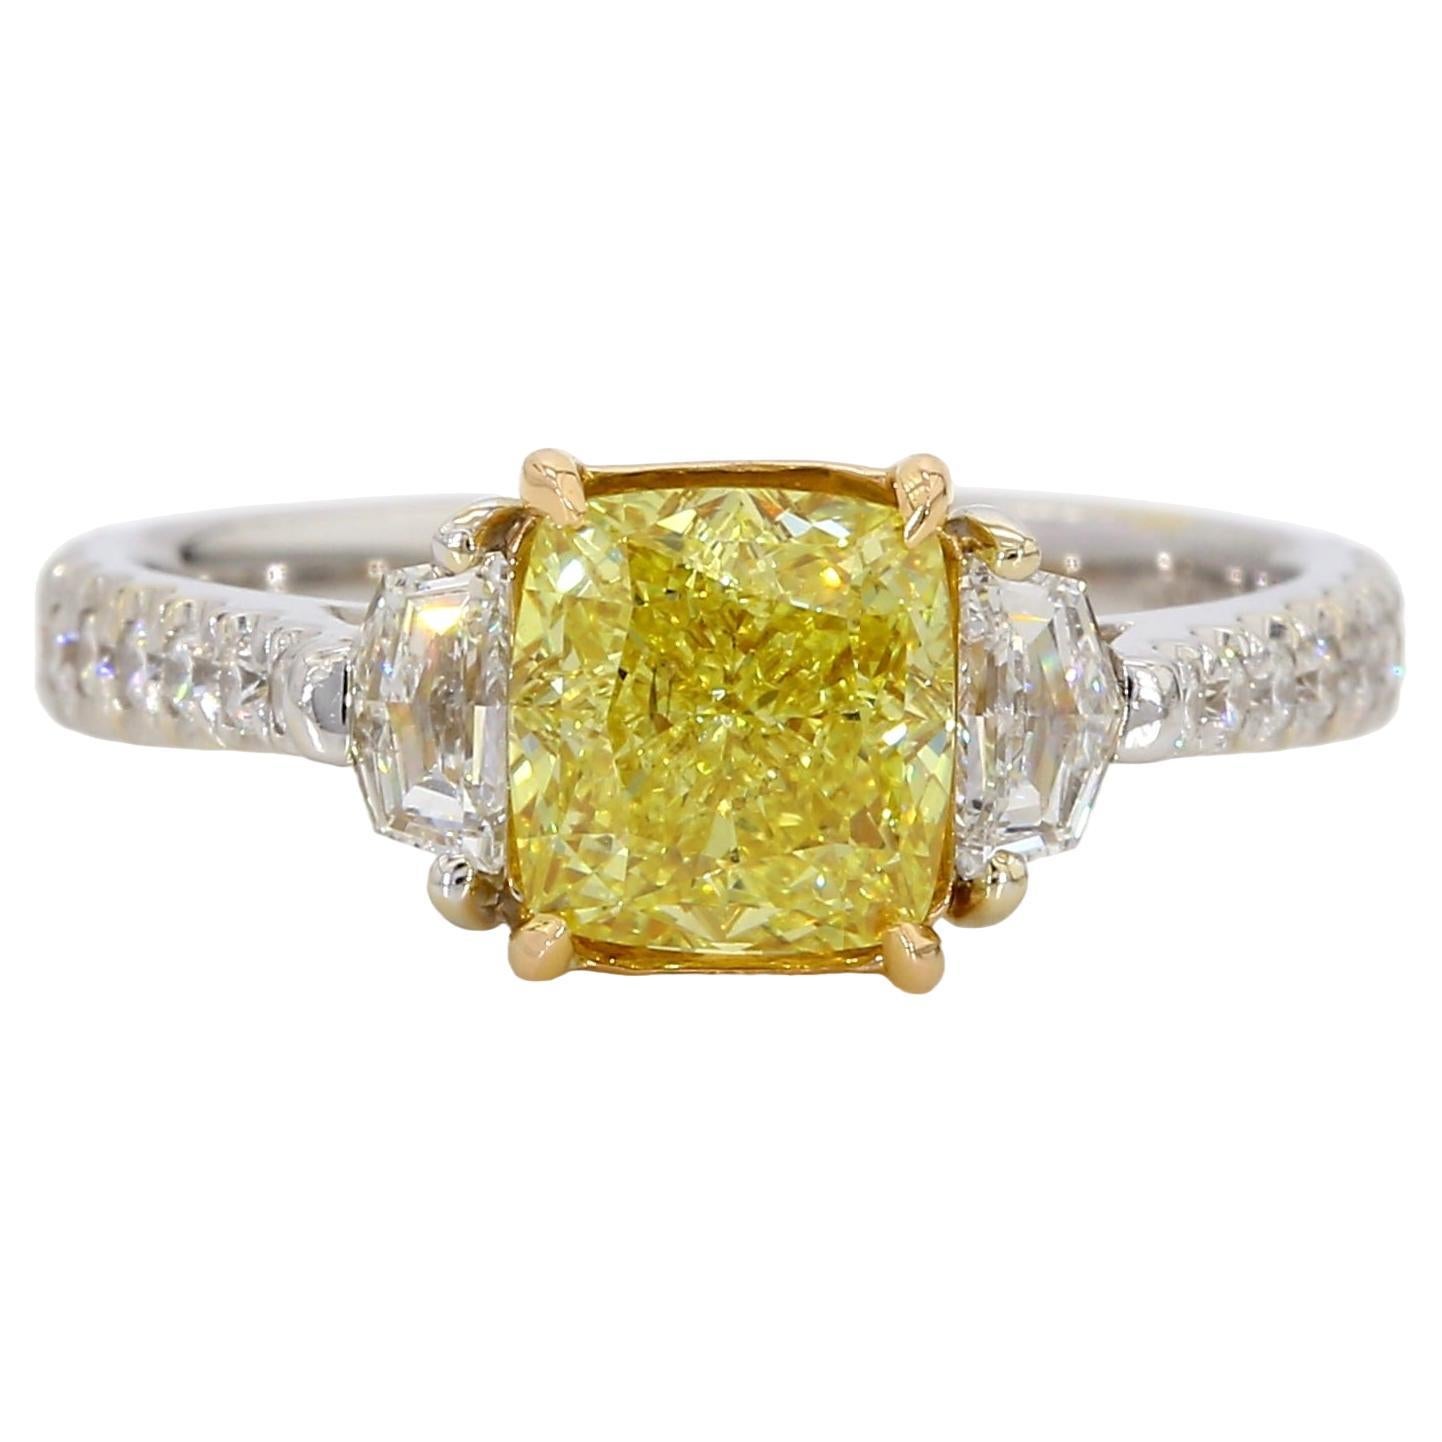 1.67 Carat Fancy Intense Yellow Diamond Three-Stone Engagement Ring, GIA Cert.